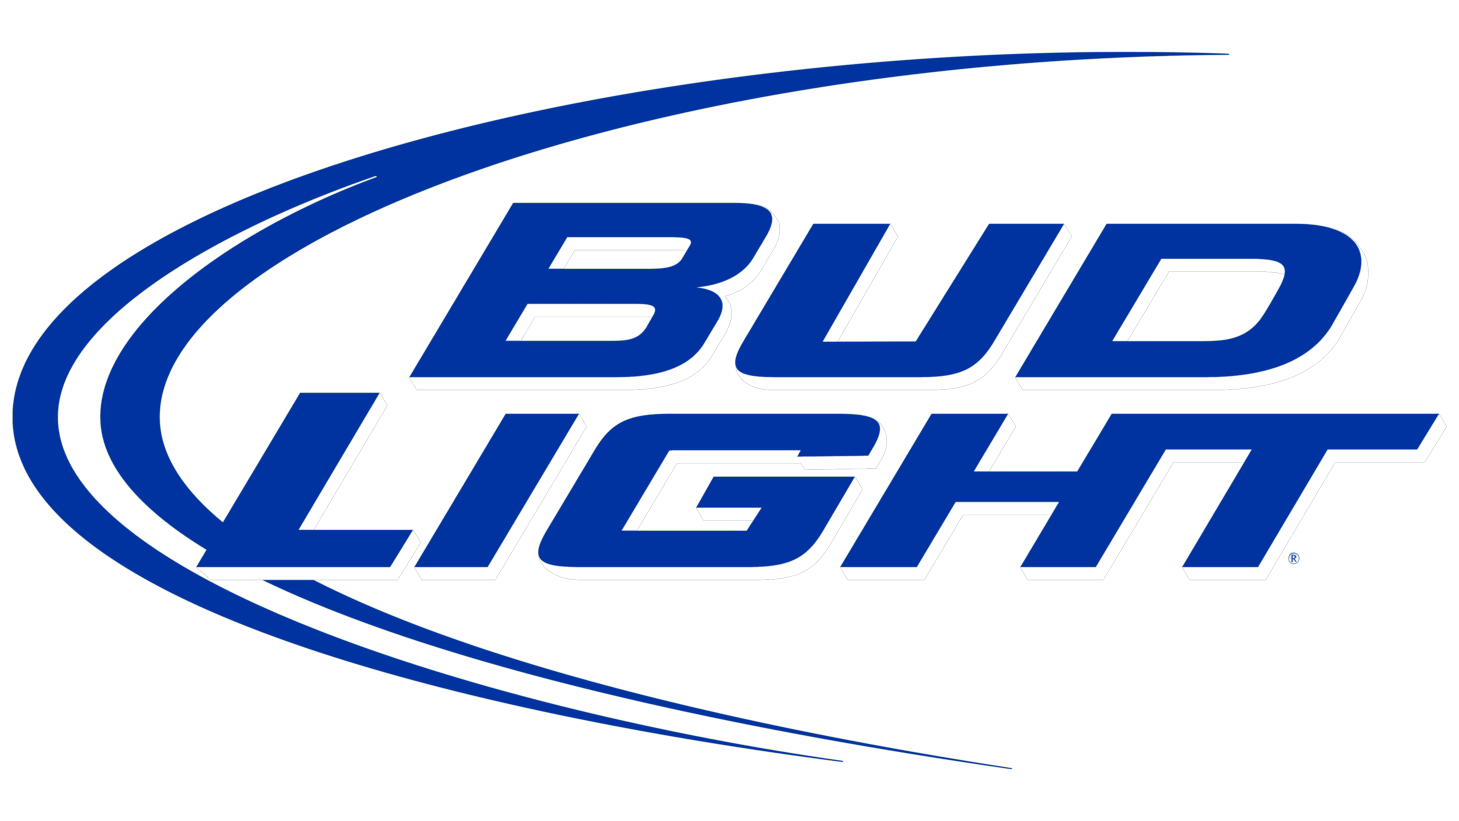 Bud light sign 2009 2013